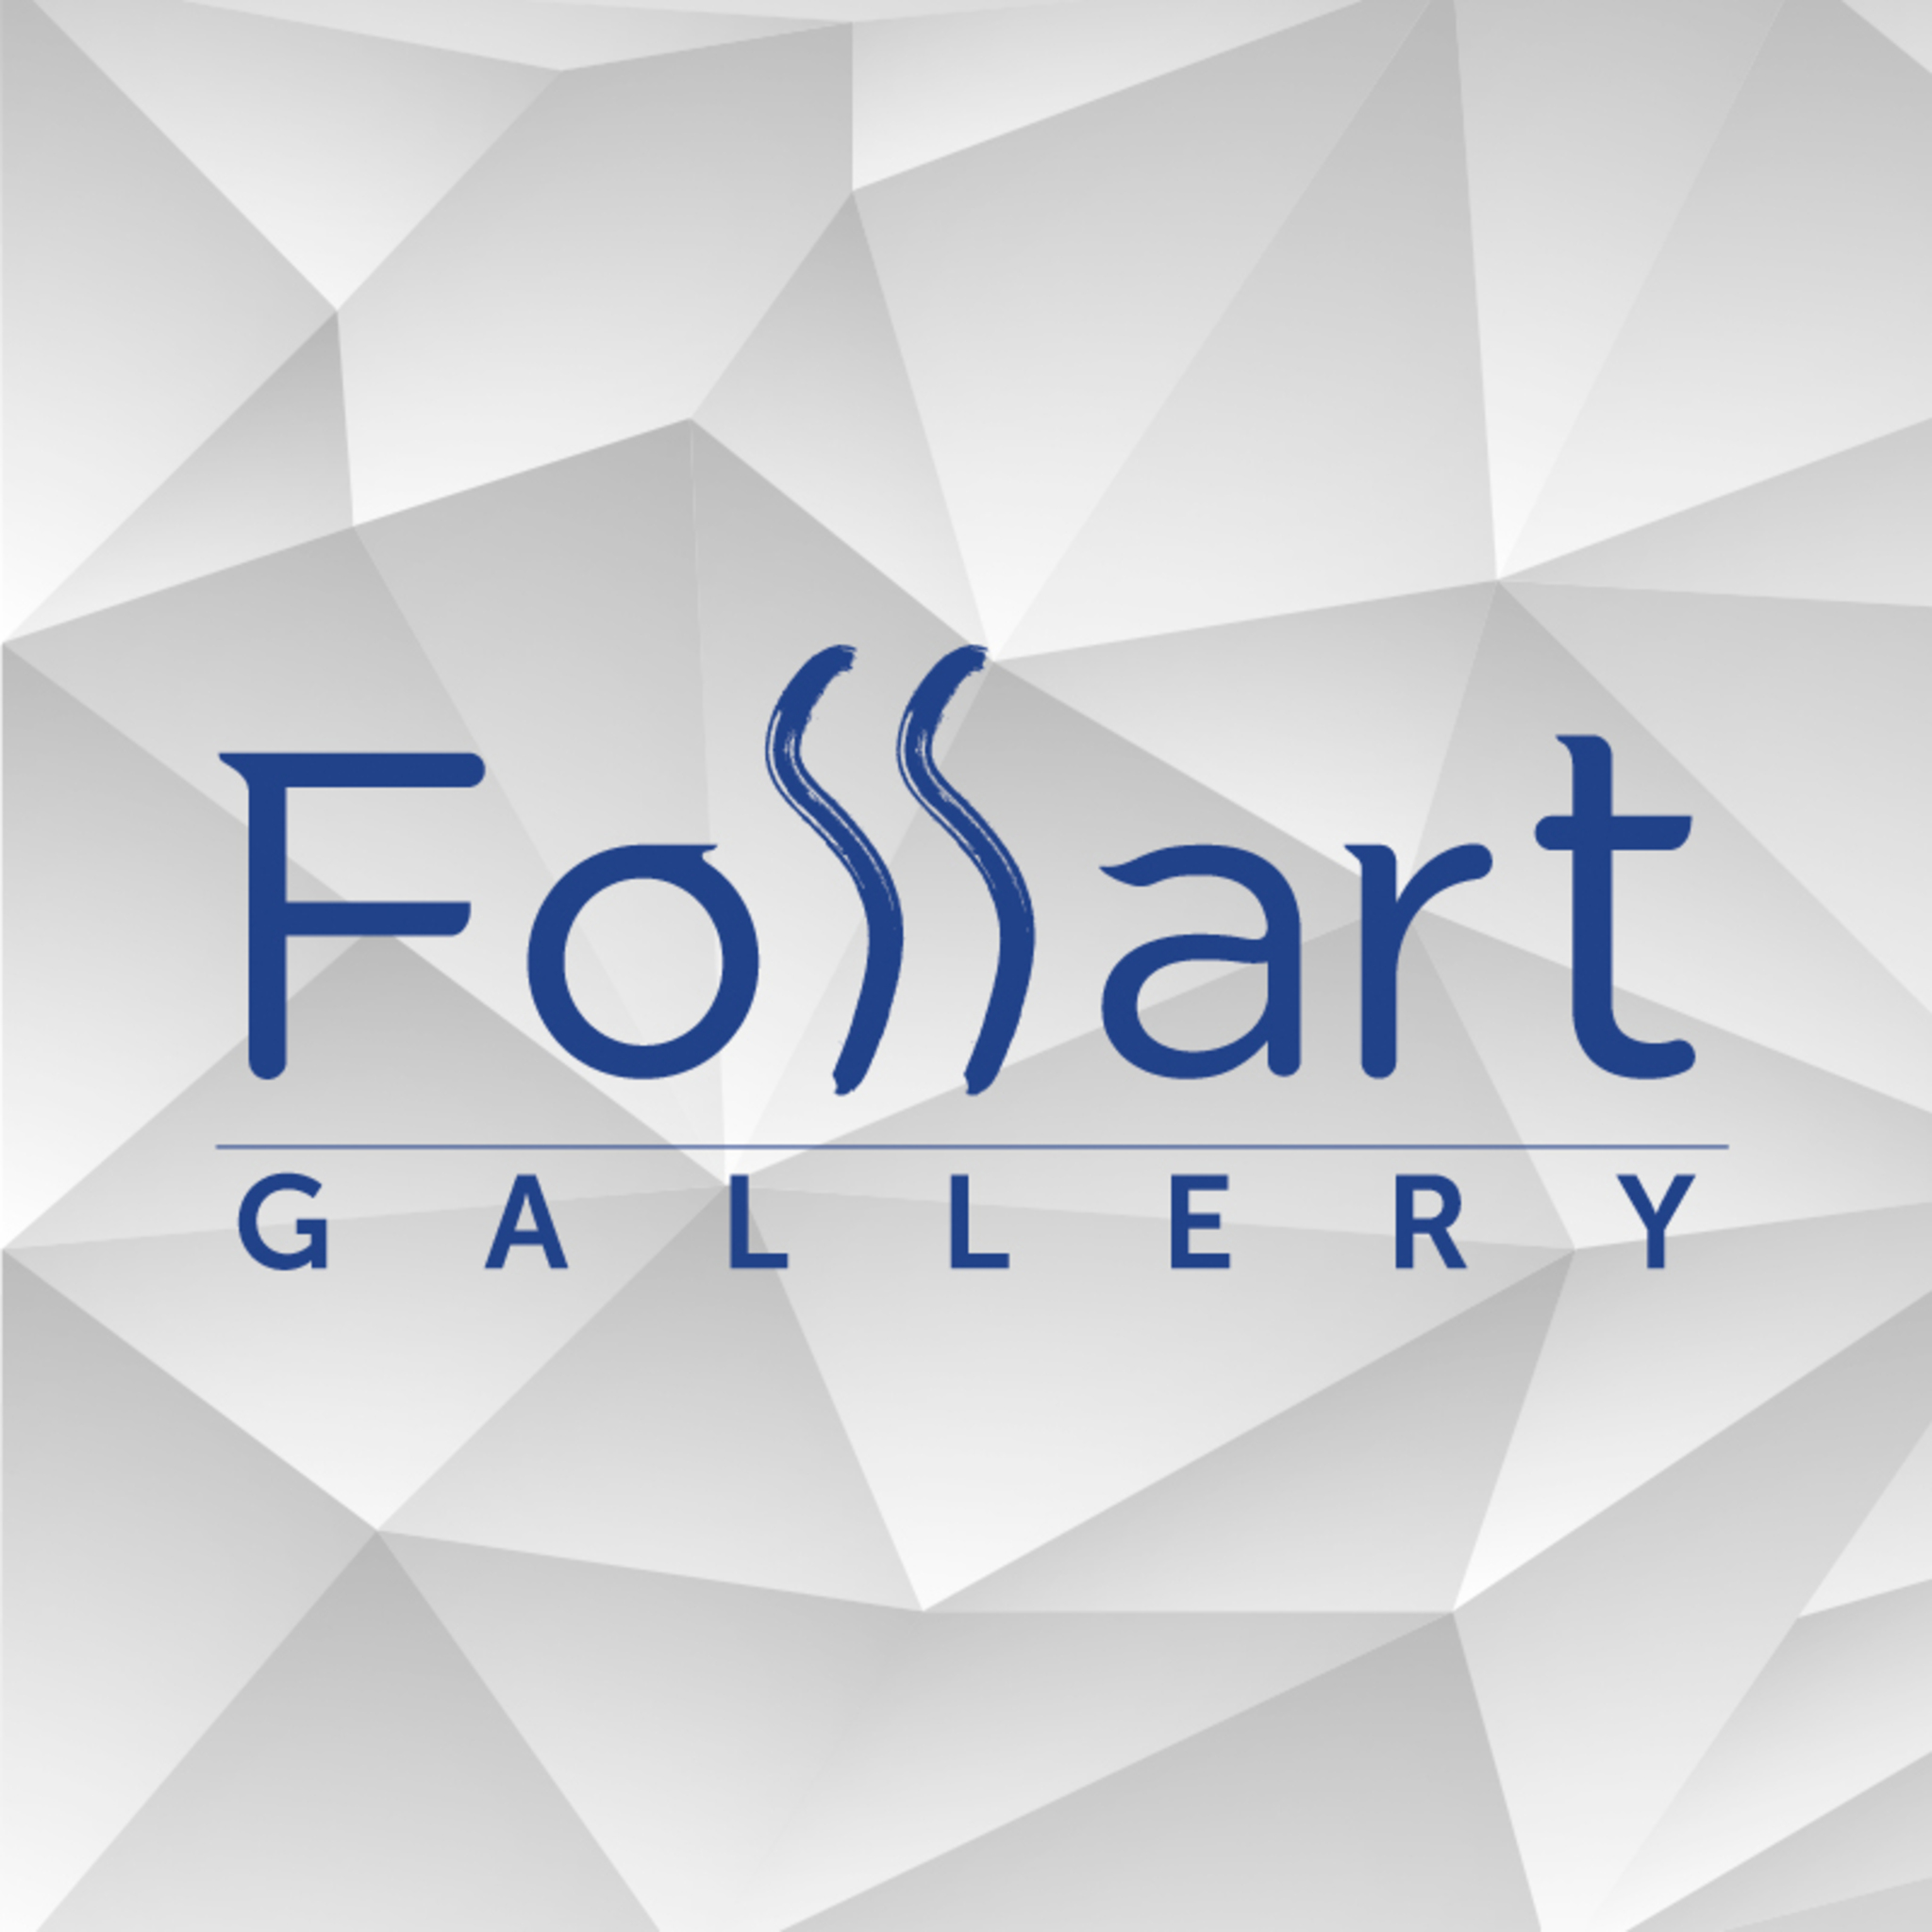 Gallery FoSSart